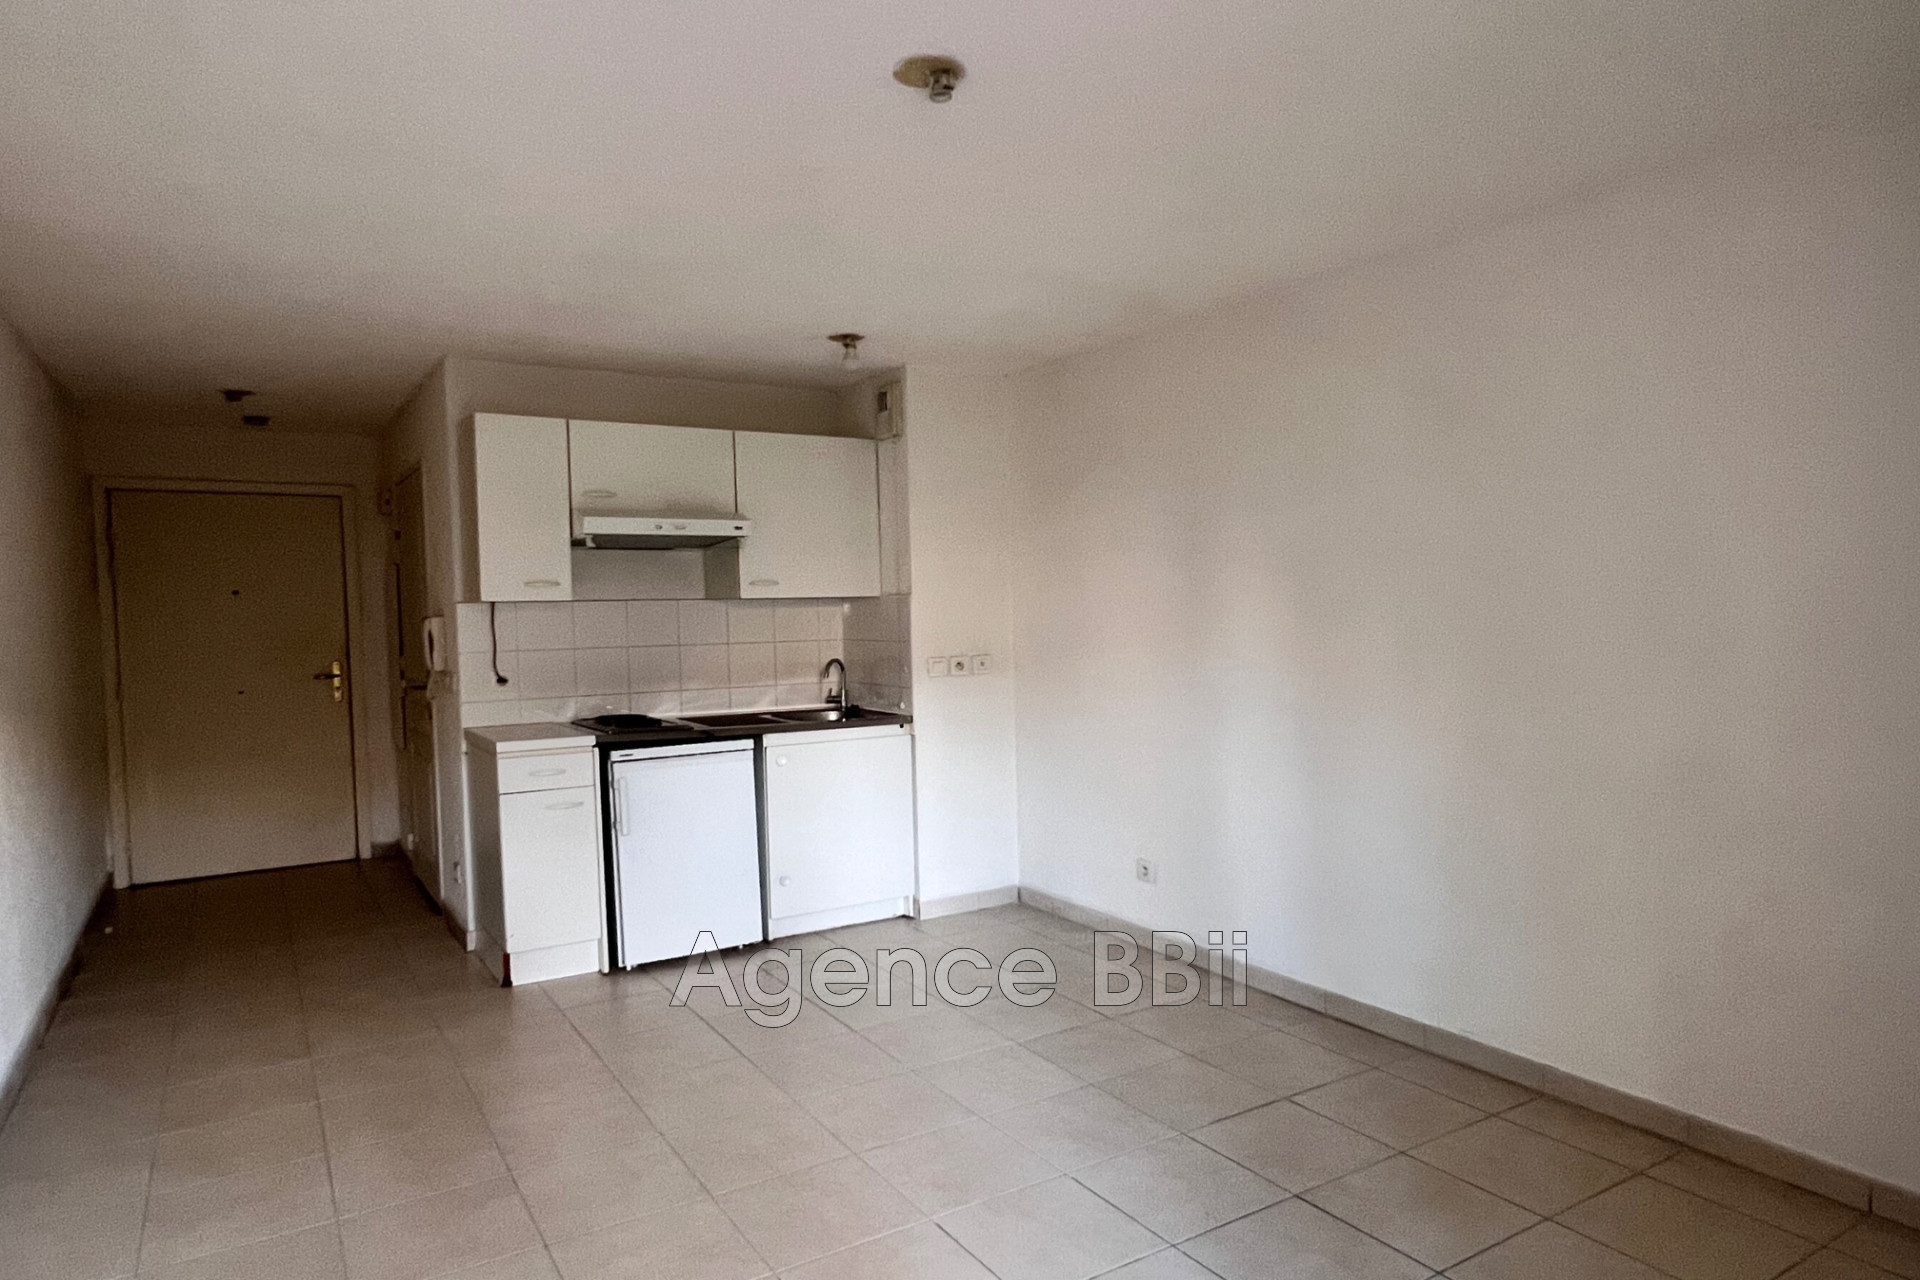 Vente Appartement 21m² 1 Pièce à Nice (06300) - BBII